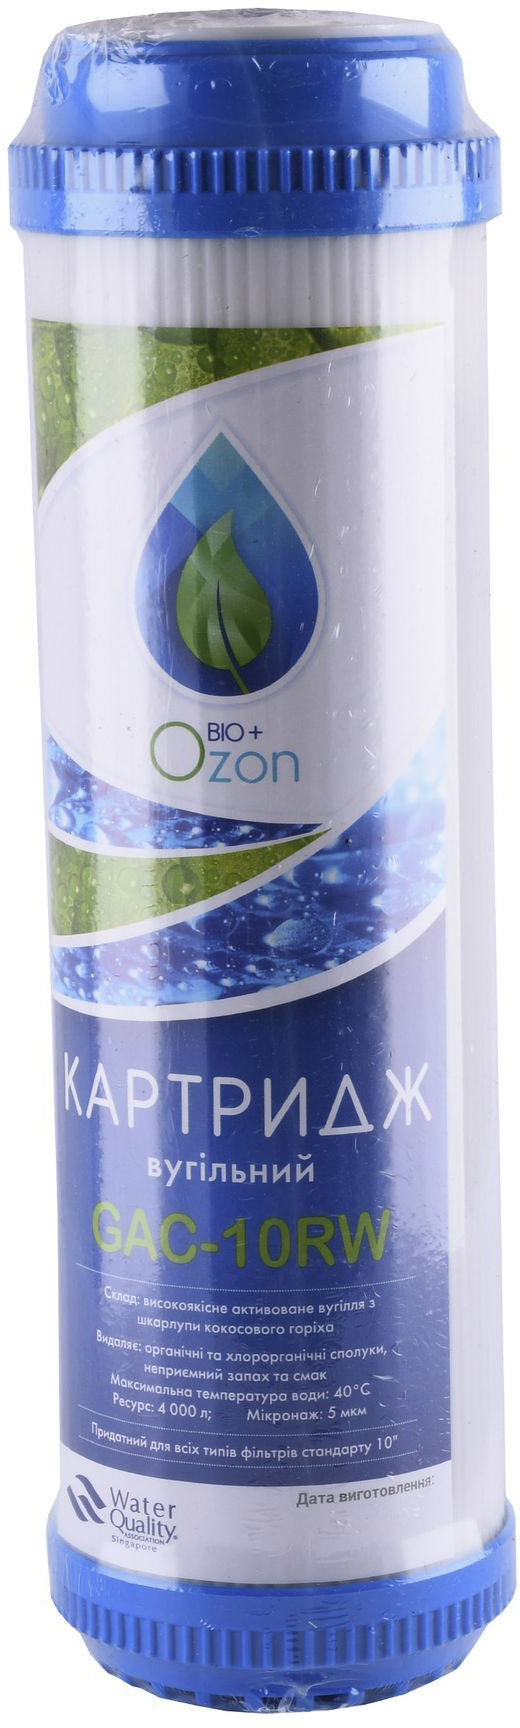 Цена картридж для фильтра  Ozon Bio+ GAC-10RW в Киеве